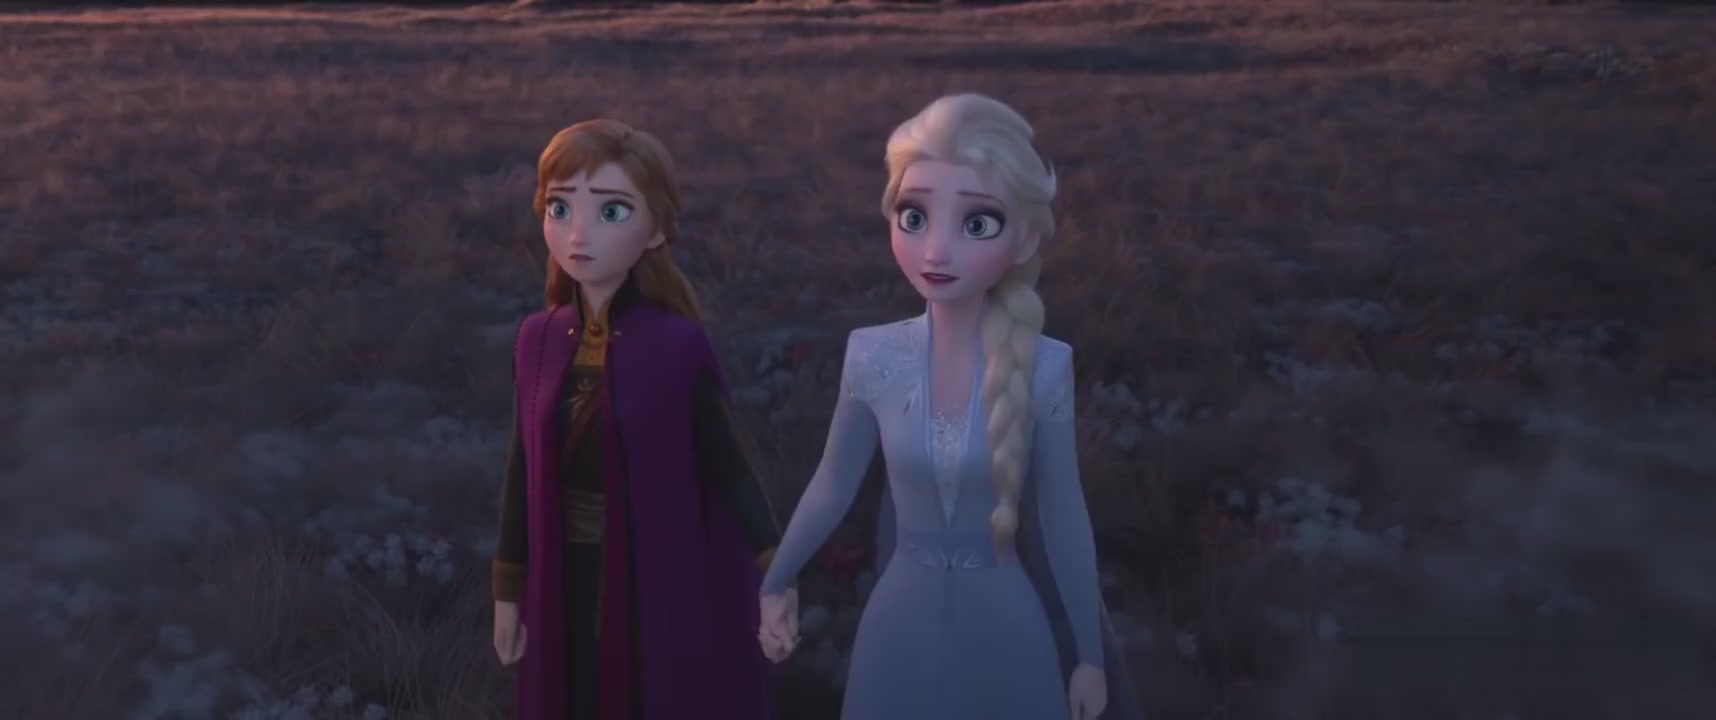 Walt Disney Frozen 2 Full Movie Trailer 2019